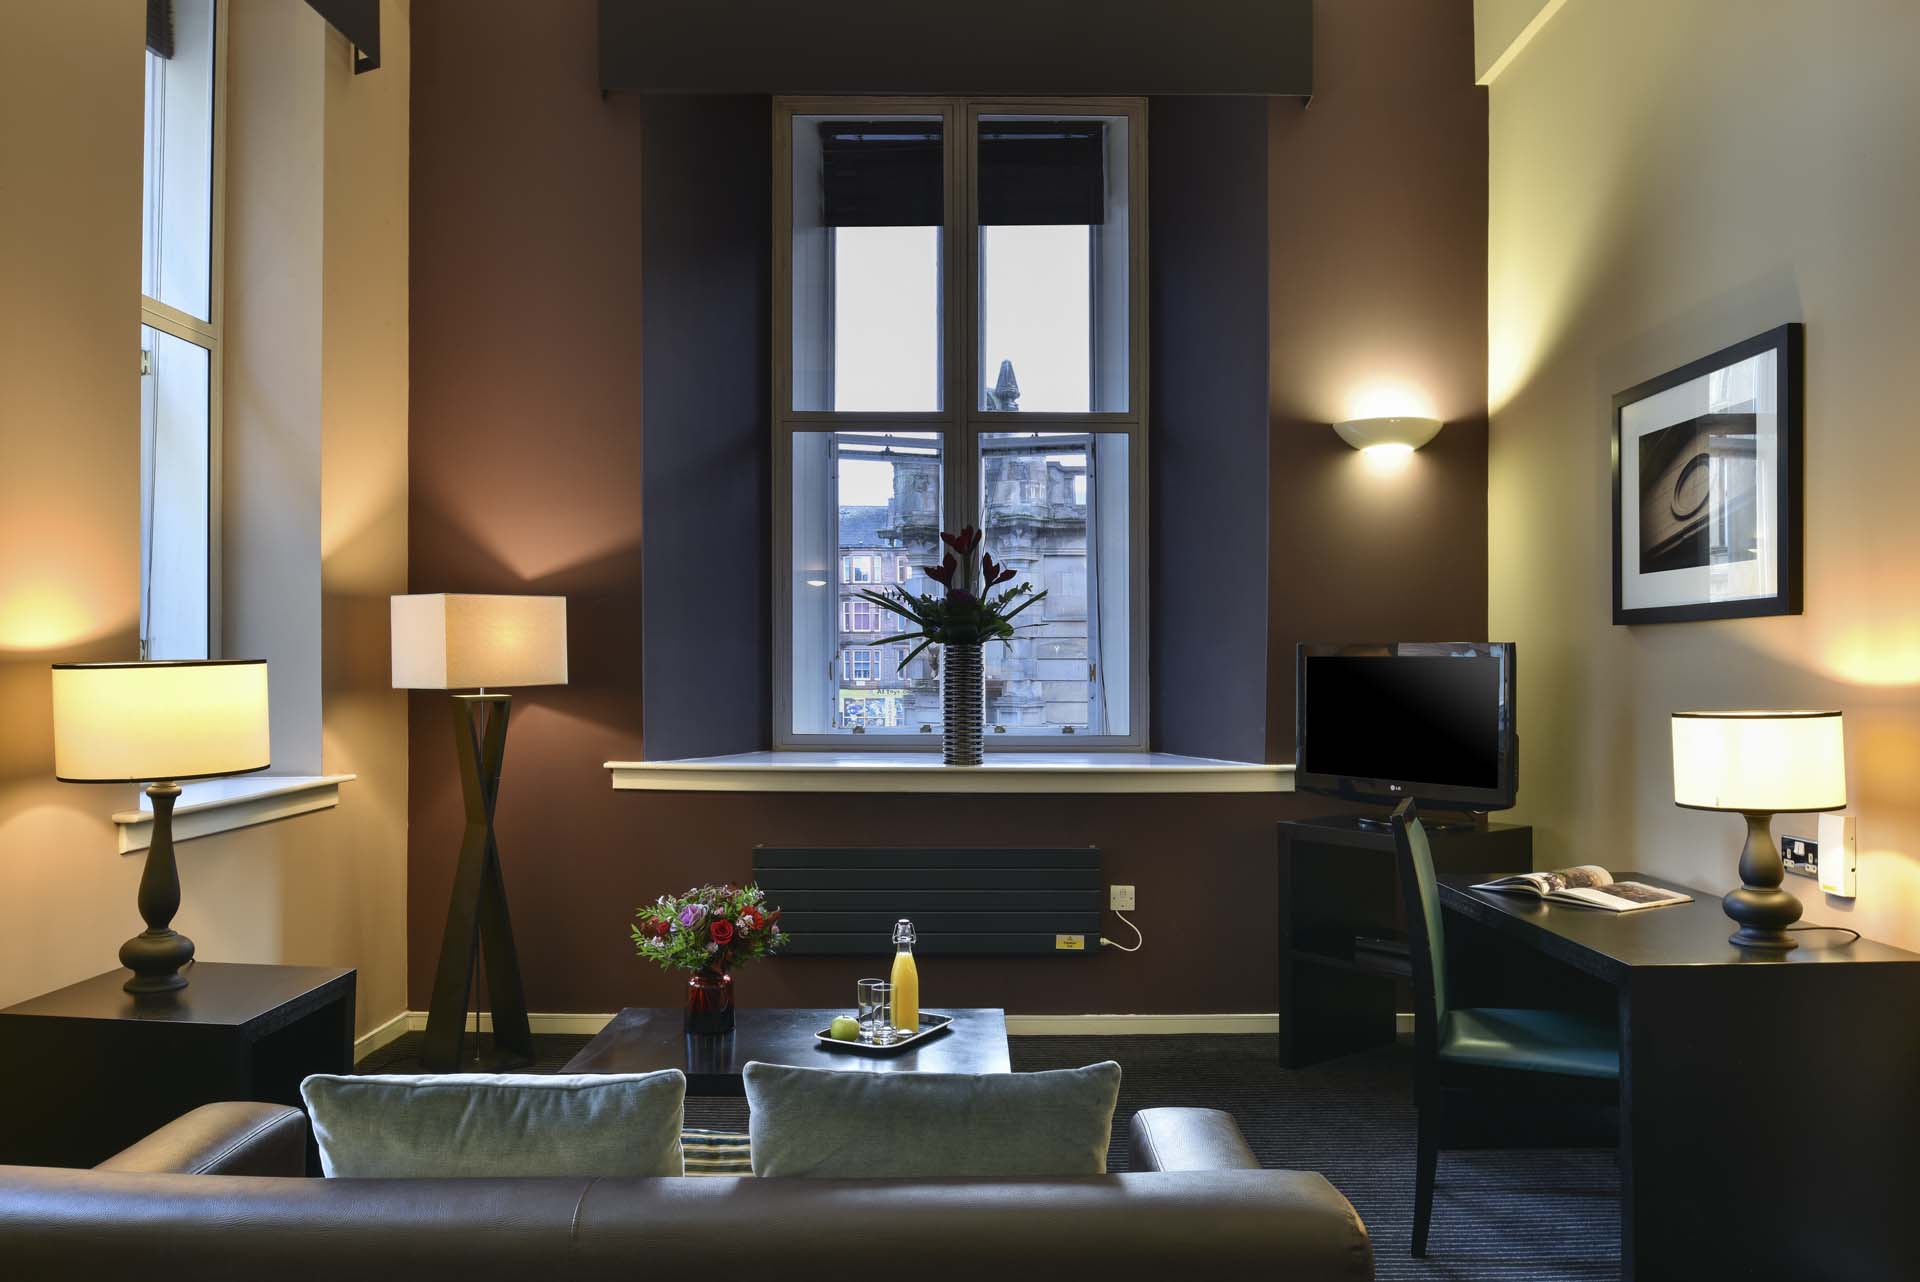 Interior - Picture of Fraser Suites Glasgow - Tripadvisor